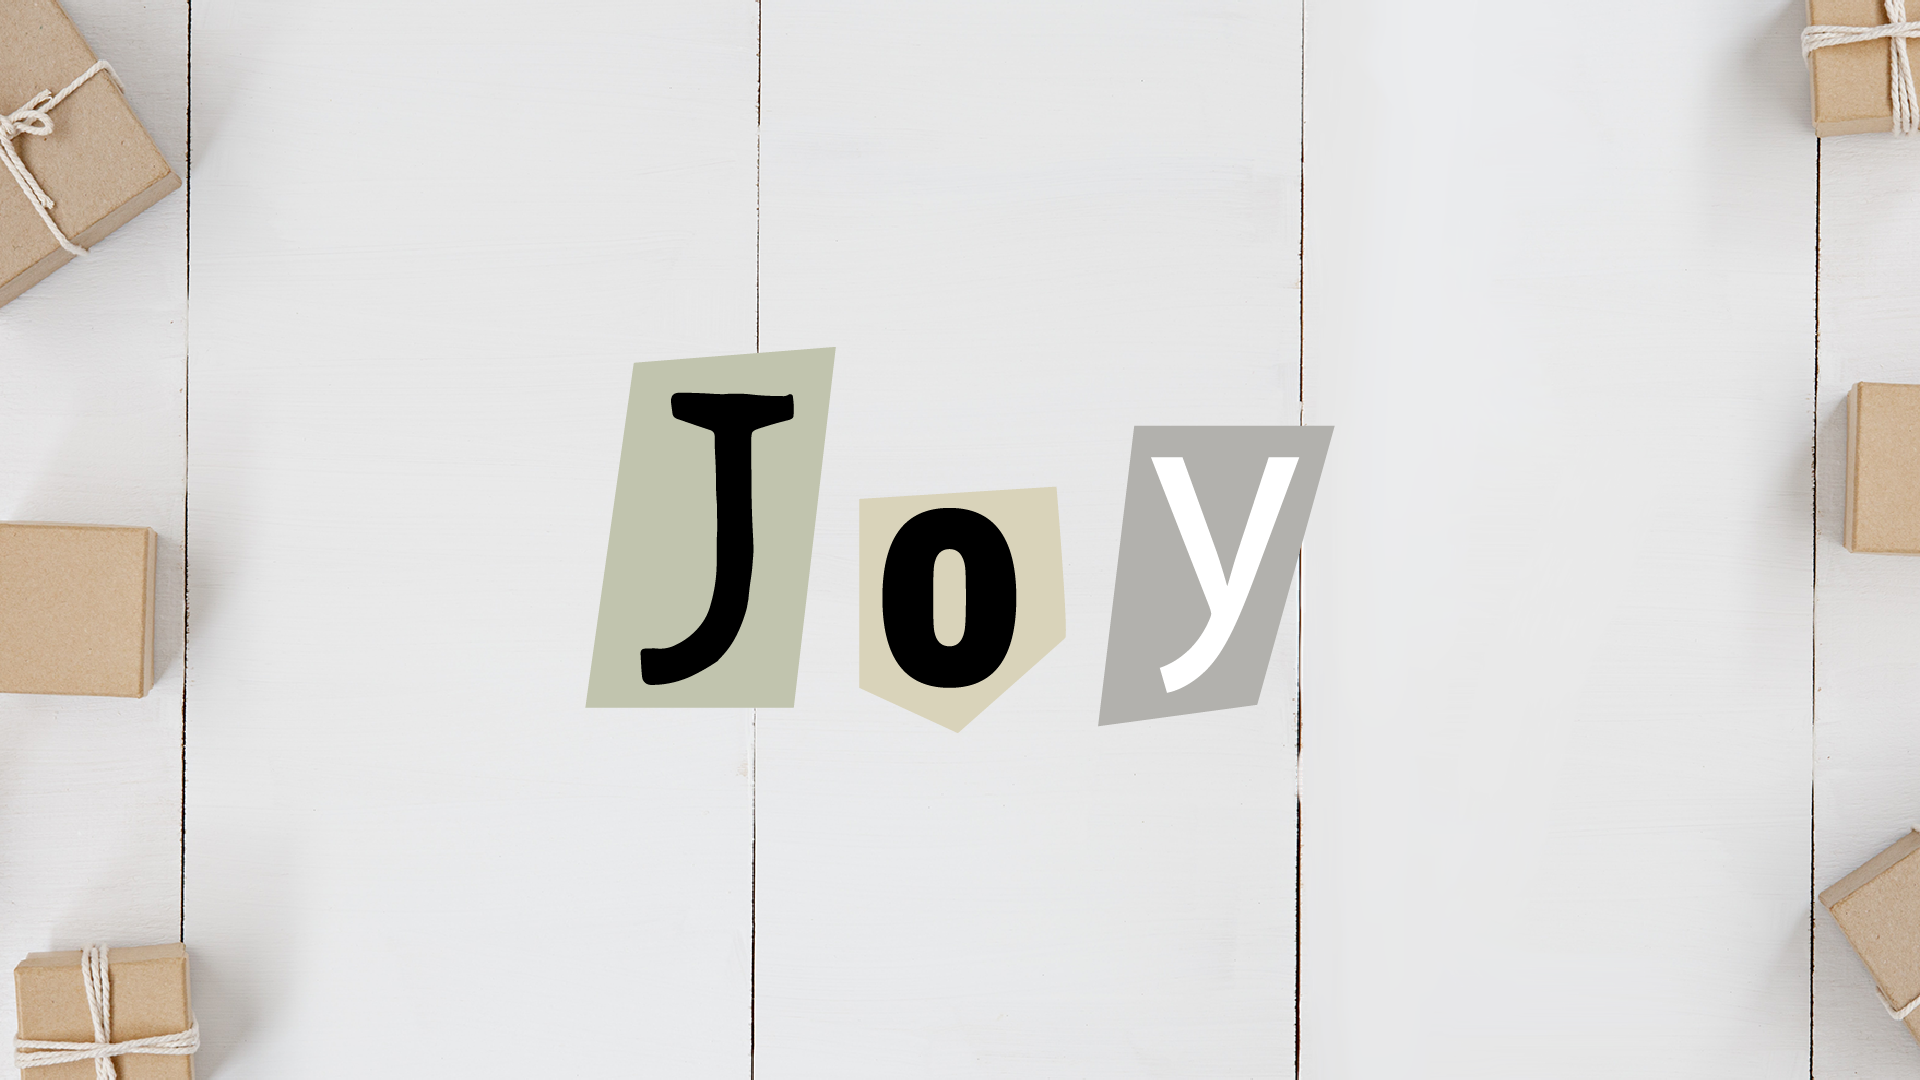 Friday, Dec. 16th (Joy)